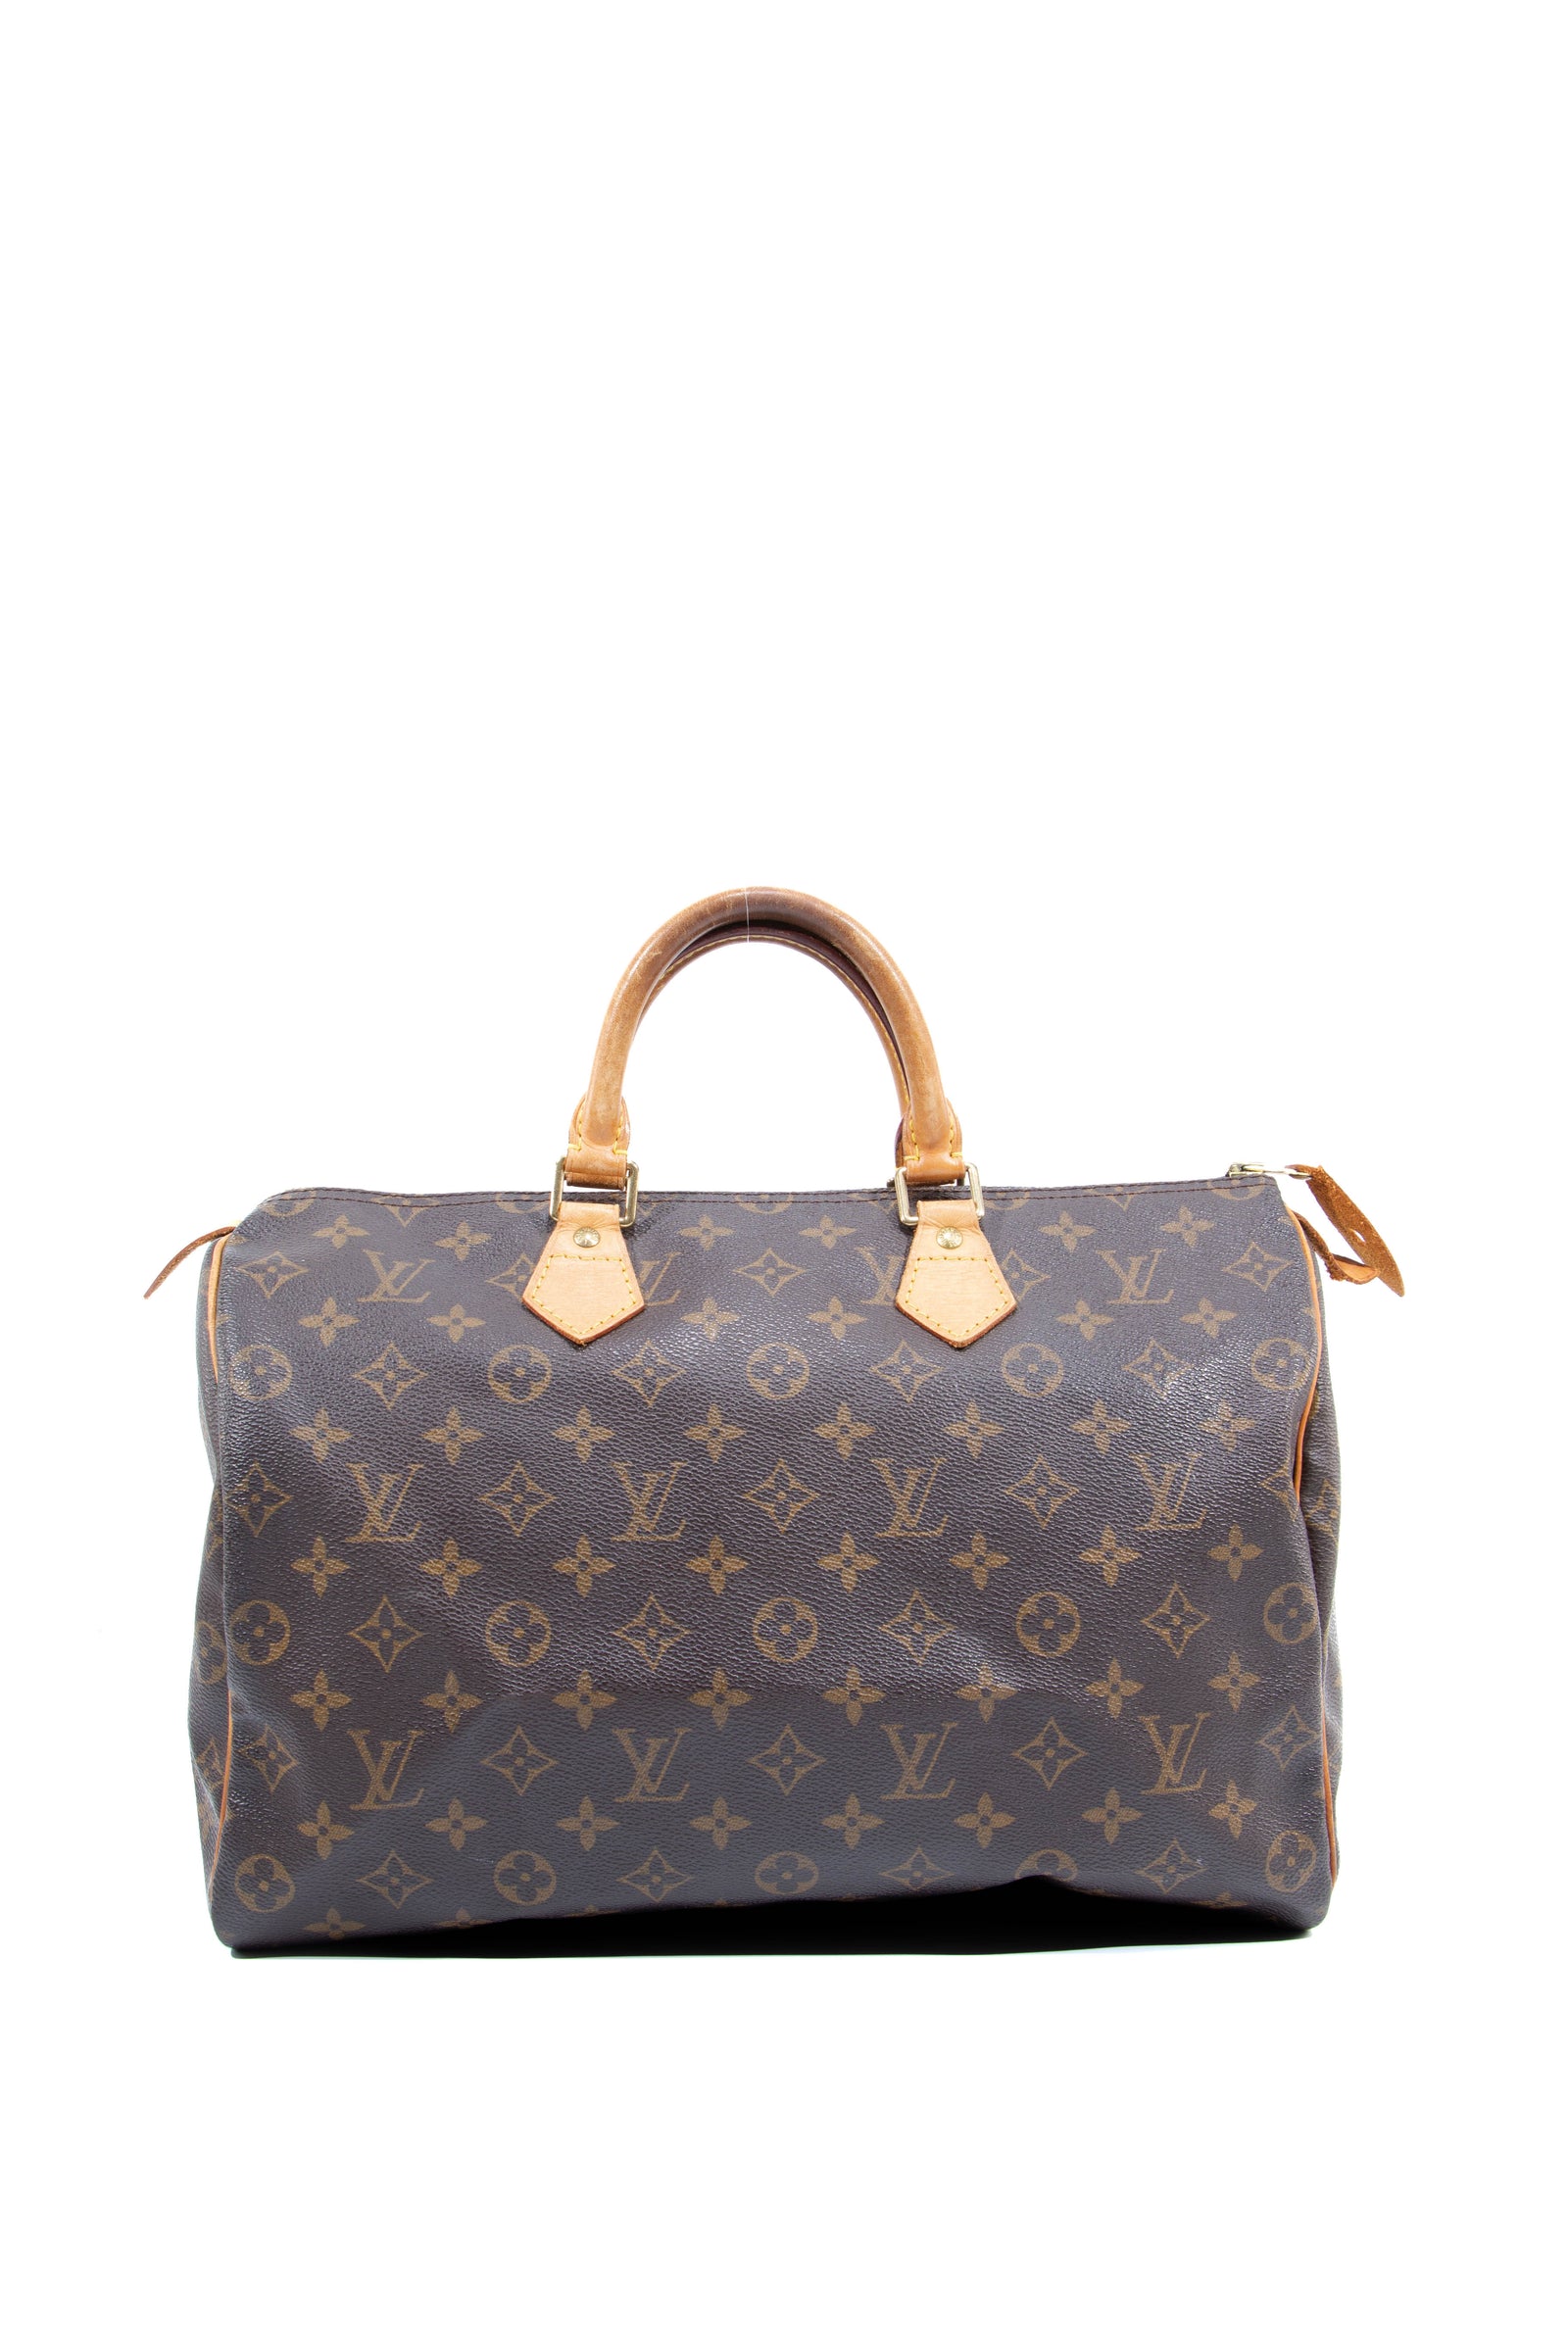 Louis Vuitton Speedy 35 Monogram bag - clothing & accessories - by